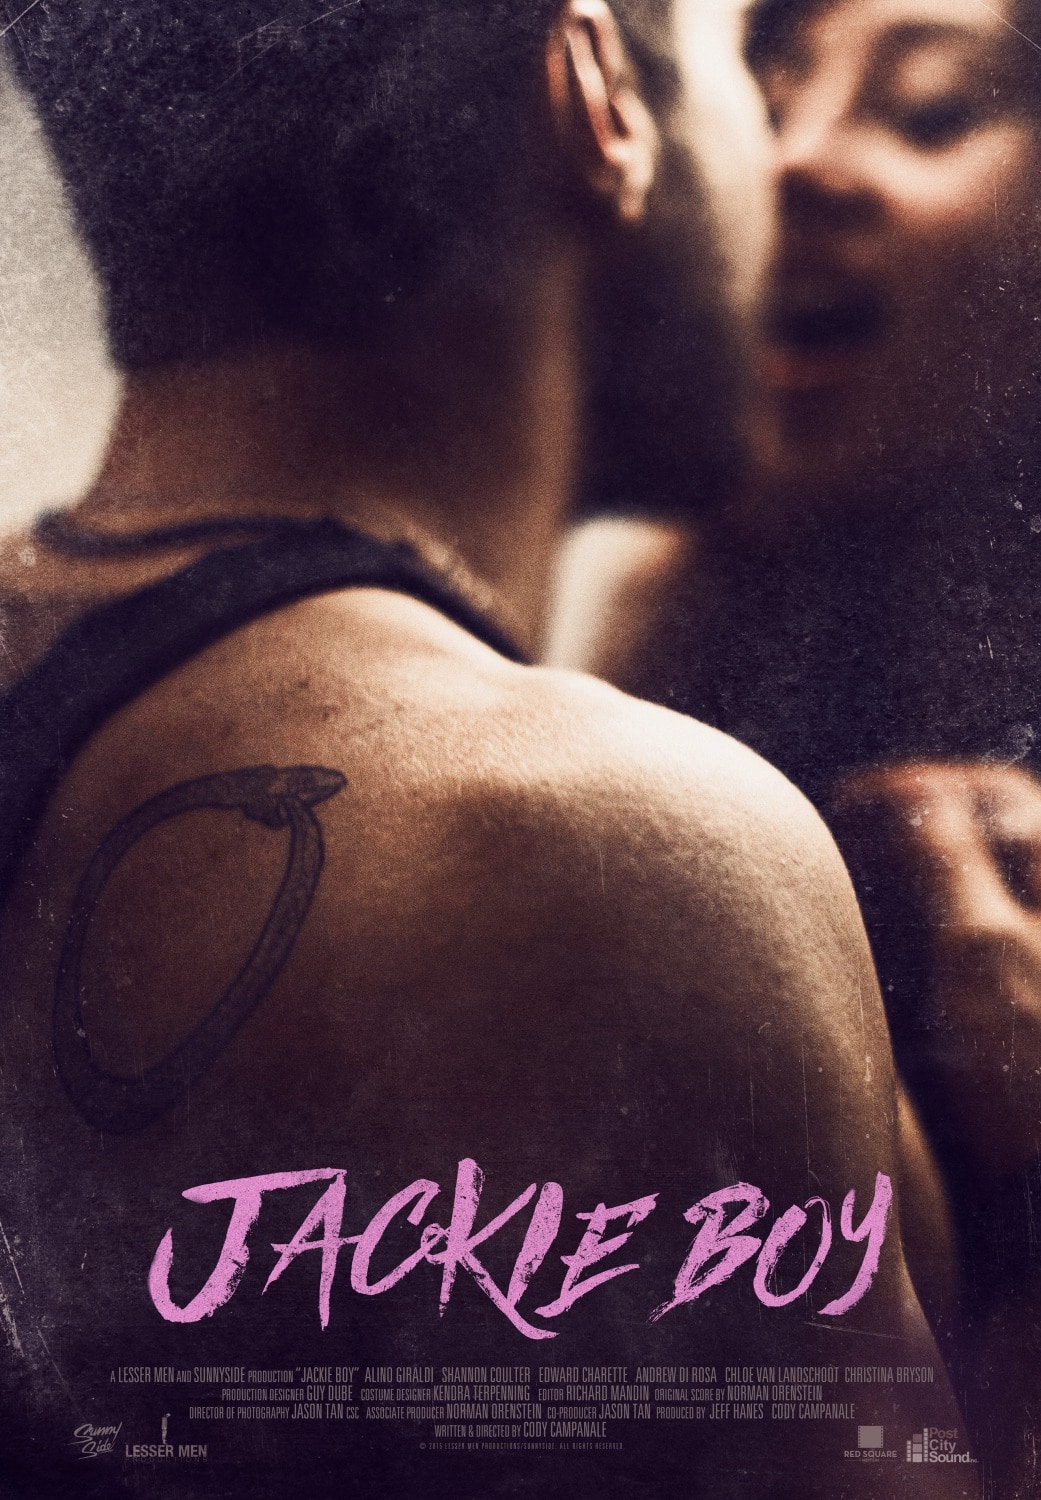 Jackie Boy – Movie Review